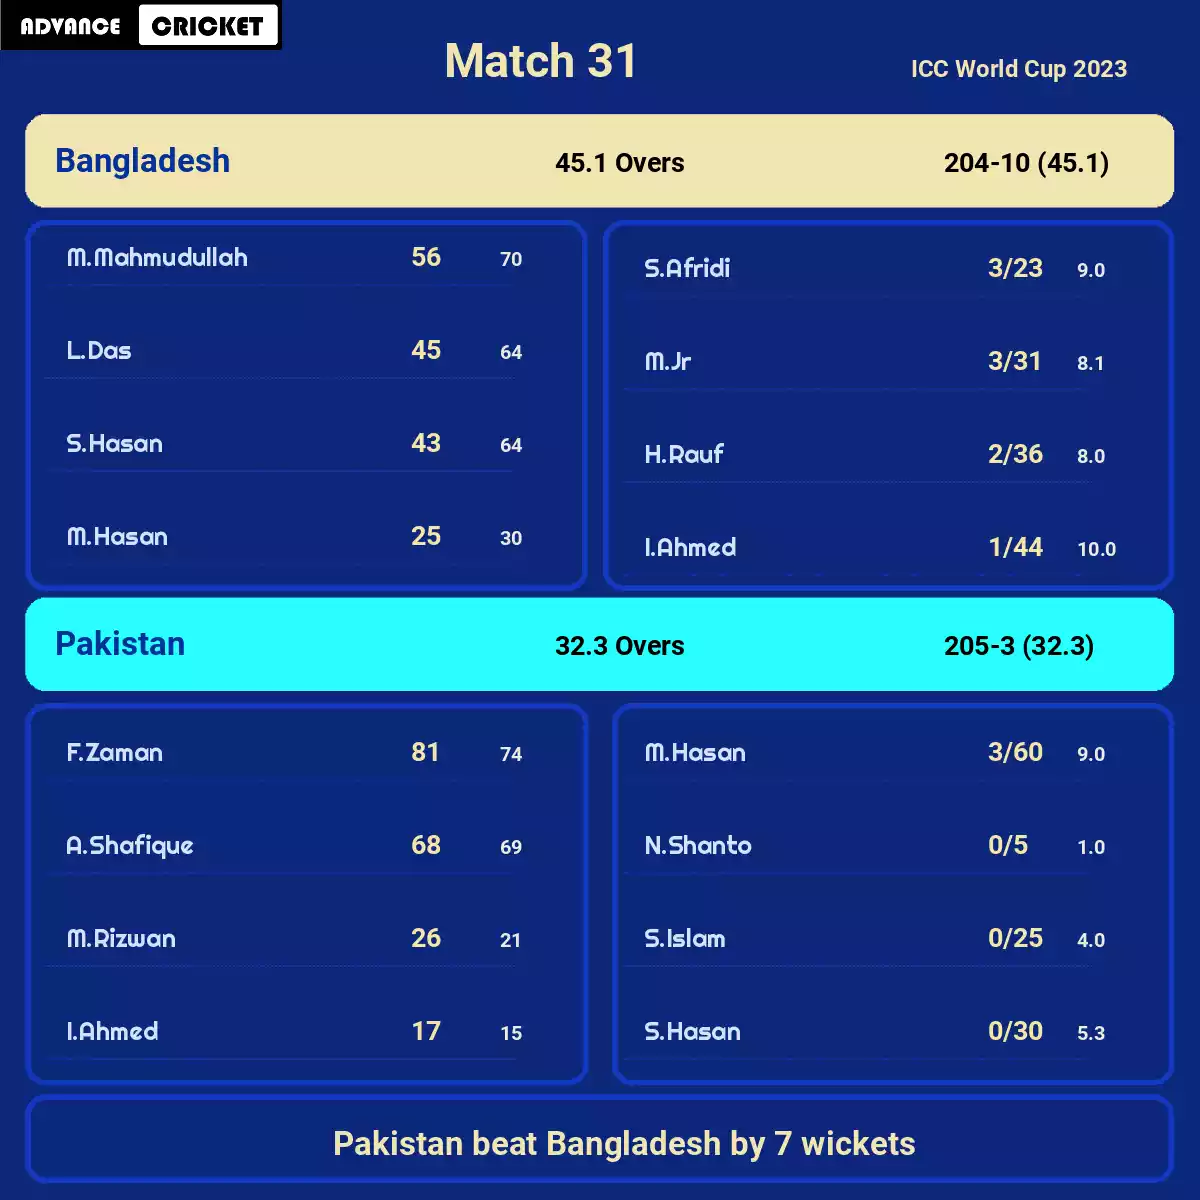 PAK vs BAN Match 31 ICC World Cup 2023